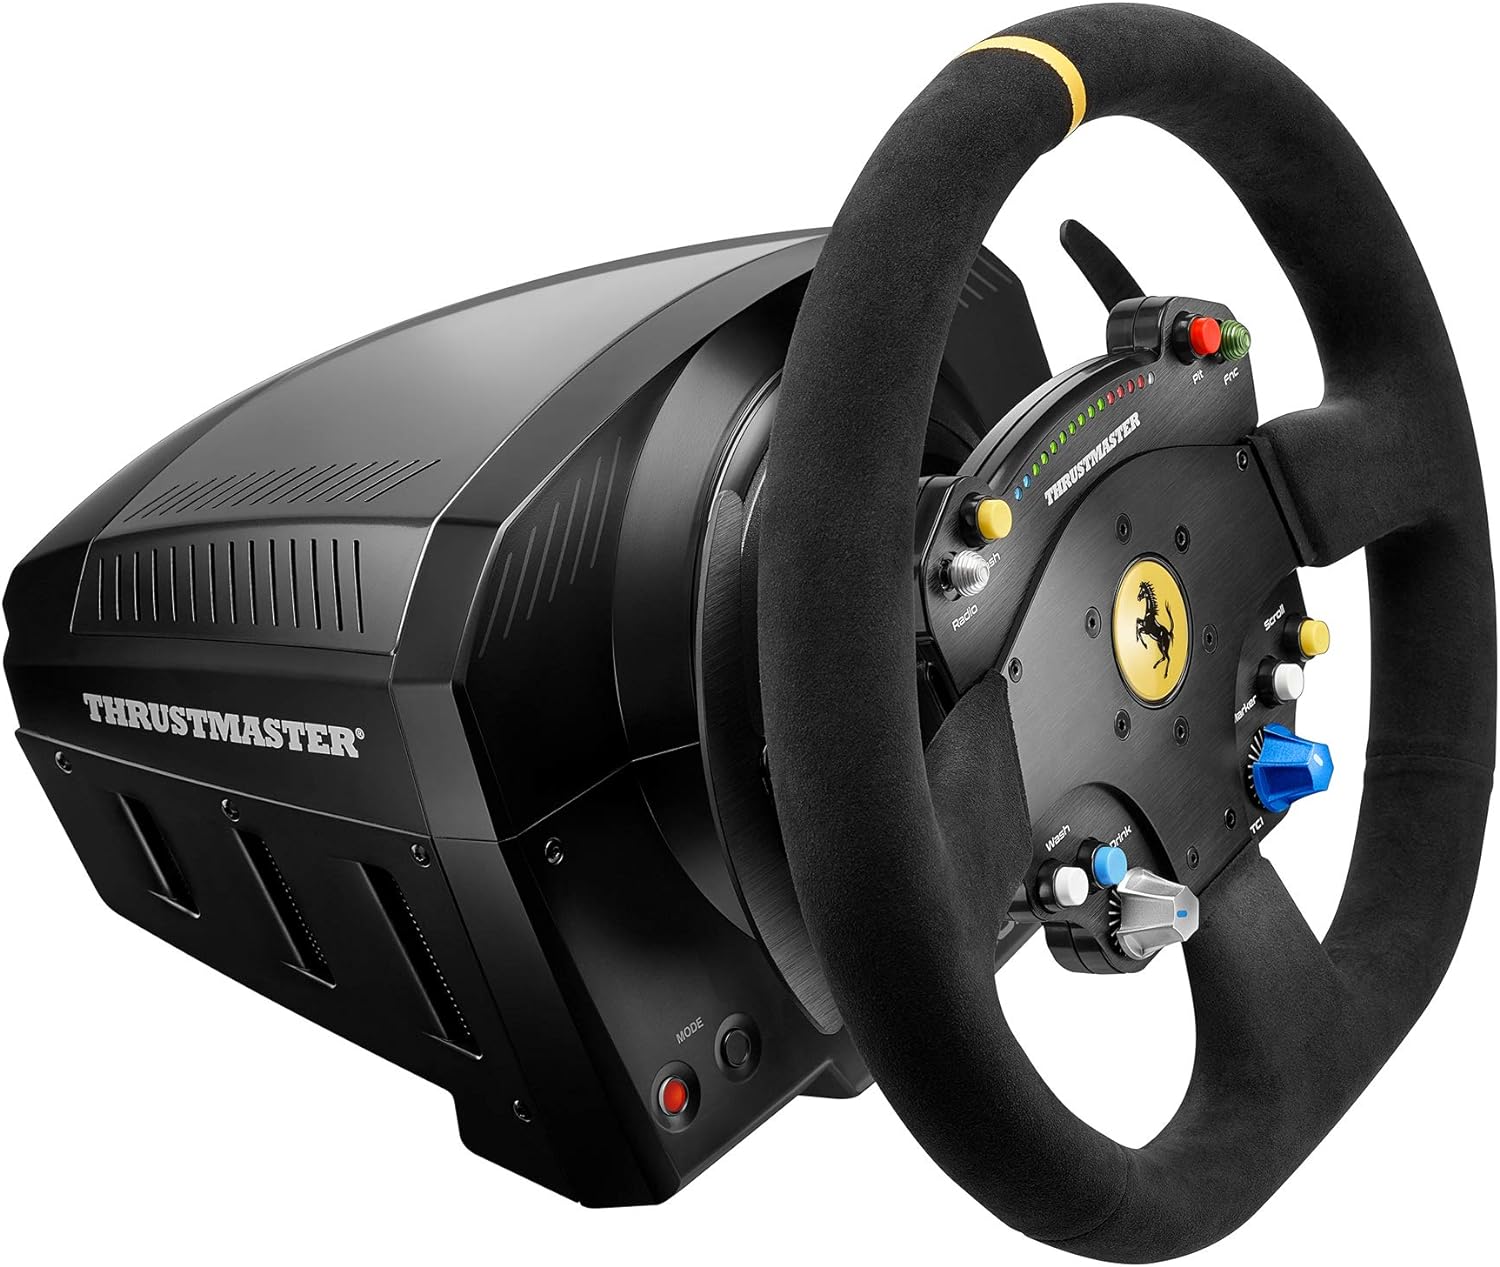 JOYPAD CONTROLLER FOR DRIVING SIMULATORS, Thrustmaster TS-PC Racer Ferrari 488 Challenge Edition Black PC Steering Wheel 